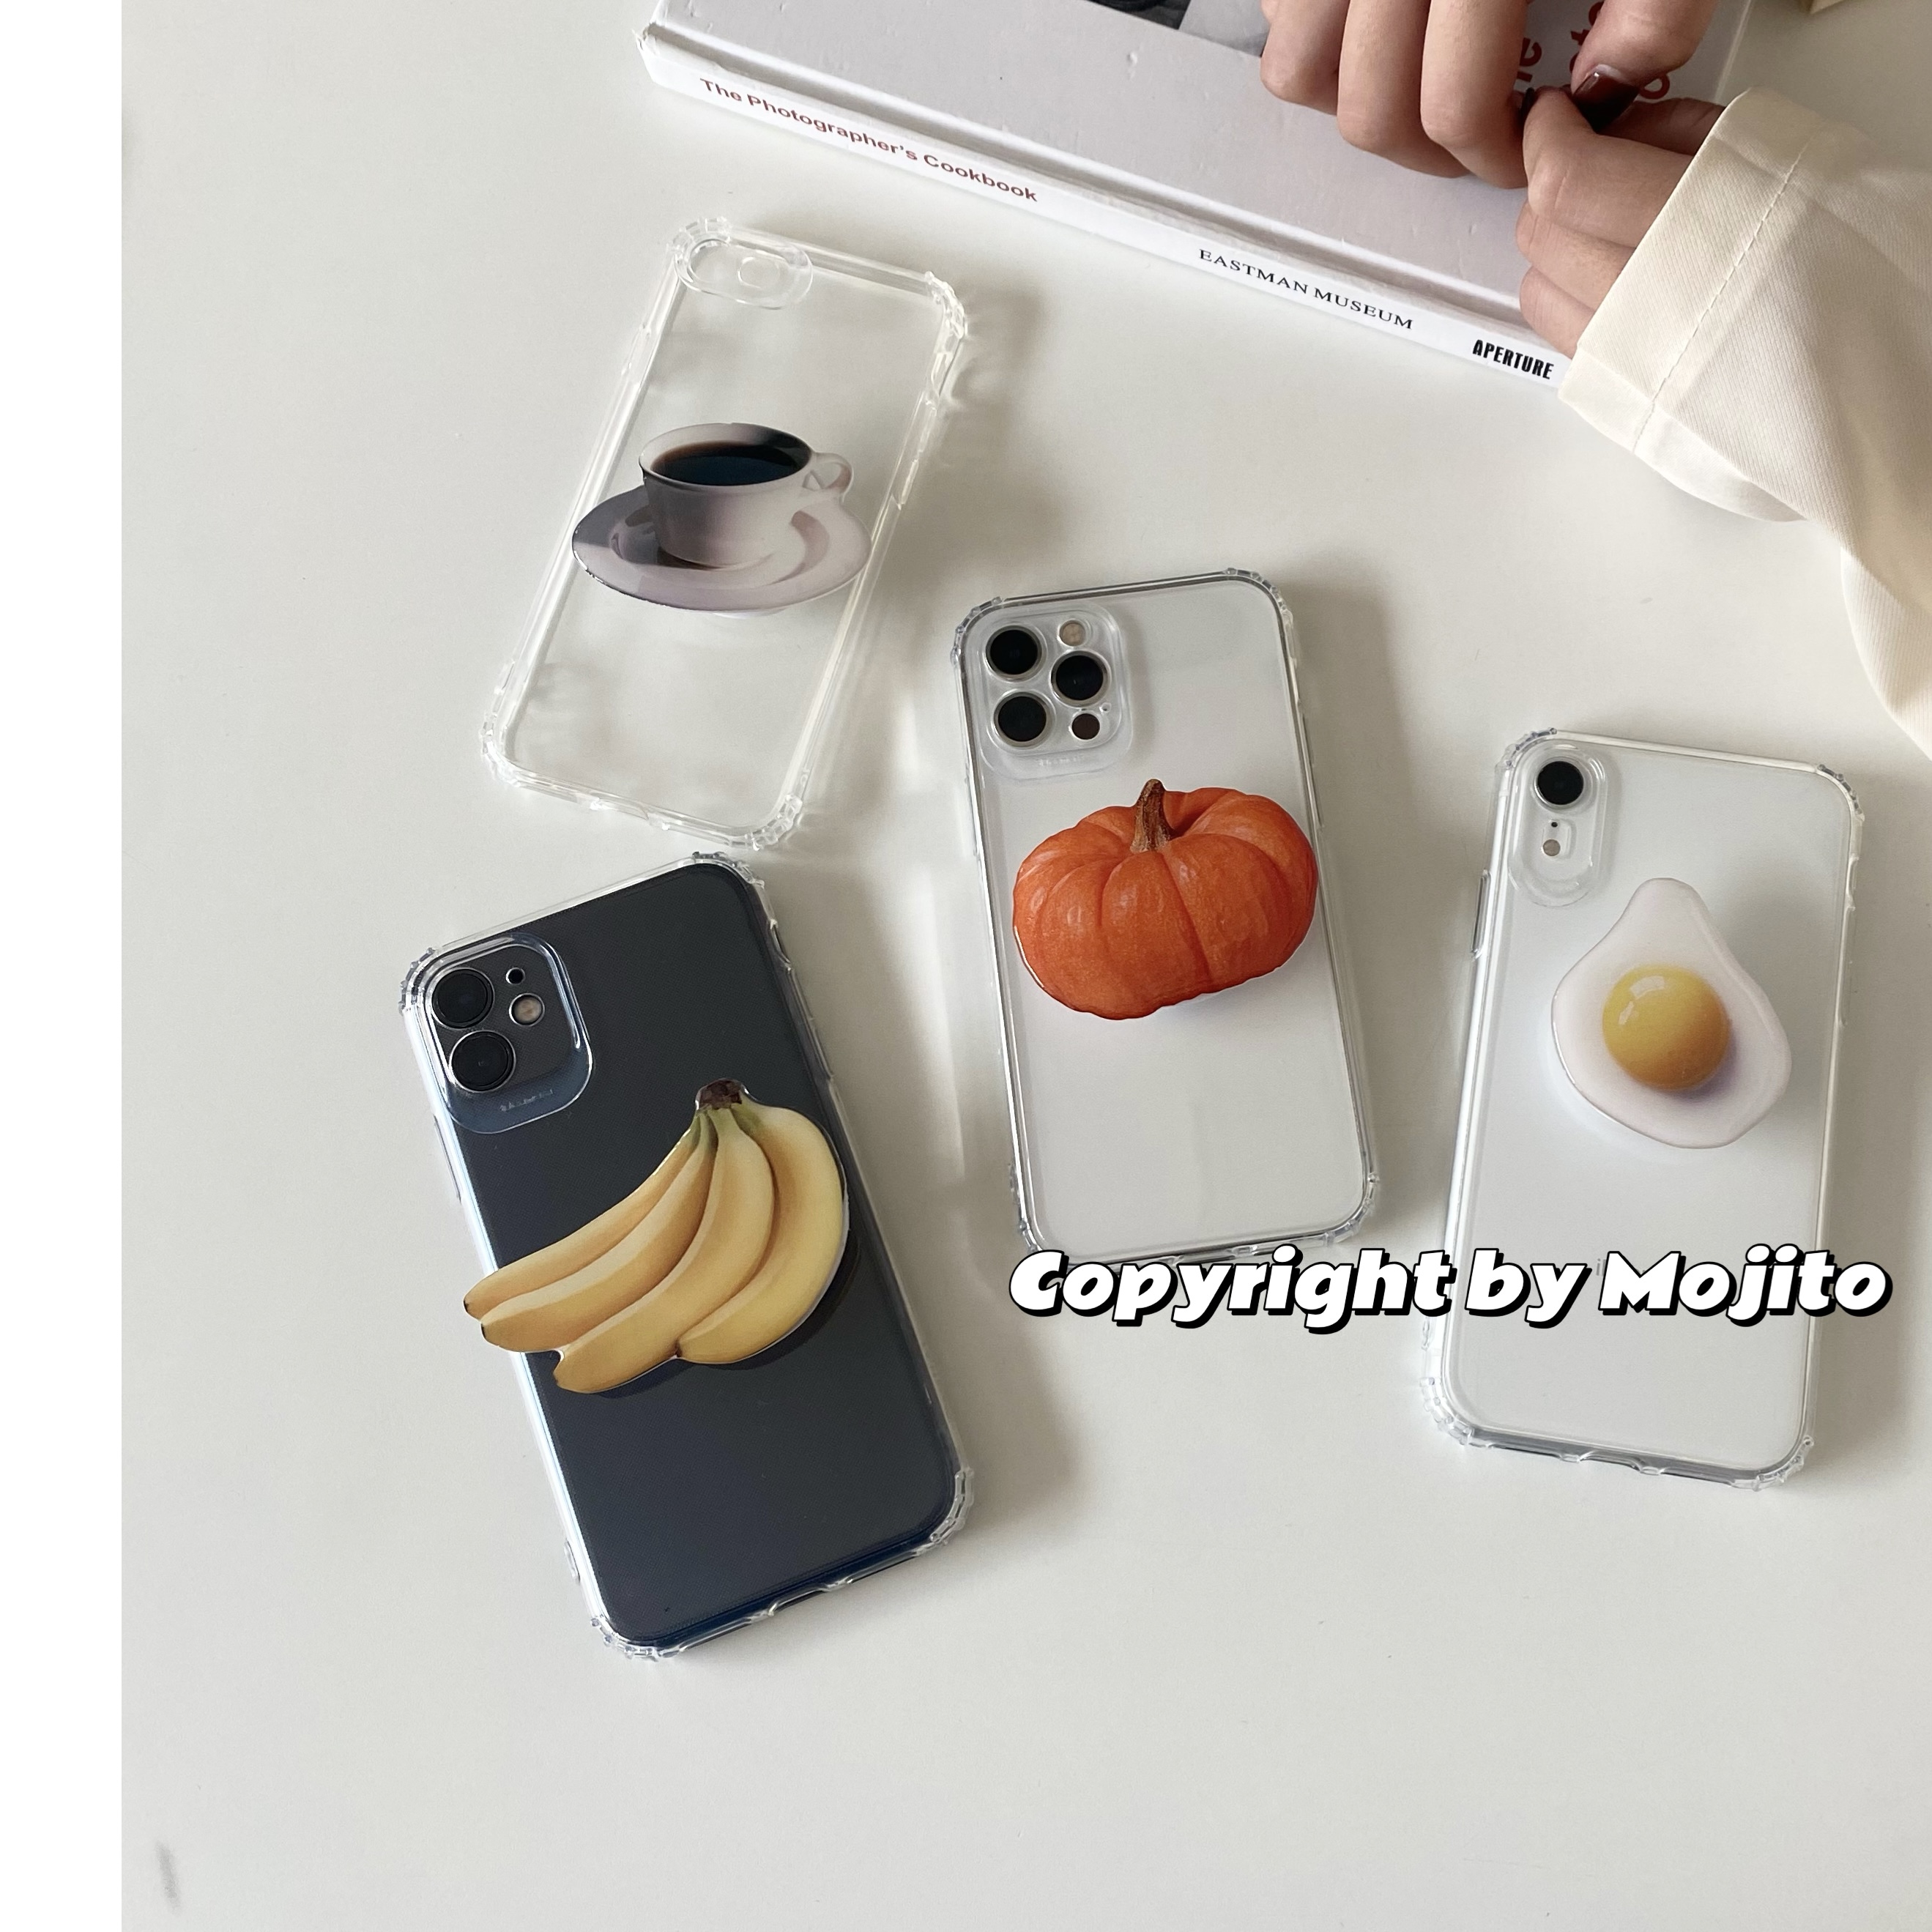 mojito| 煎蛋南瓜香蕉咖啡支架手机壳适用苹果15pro Max/14pro透明软壳iPhone13/12/11保护套